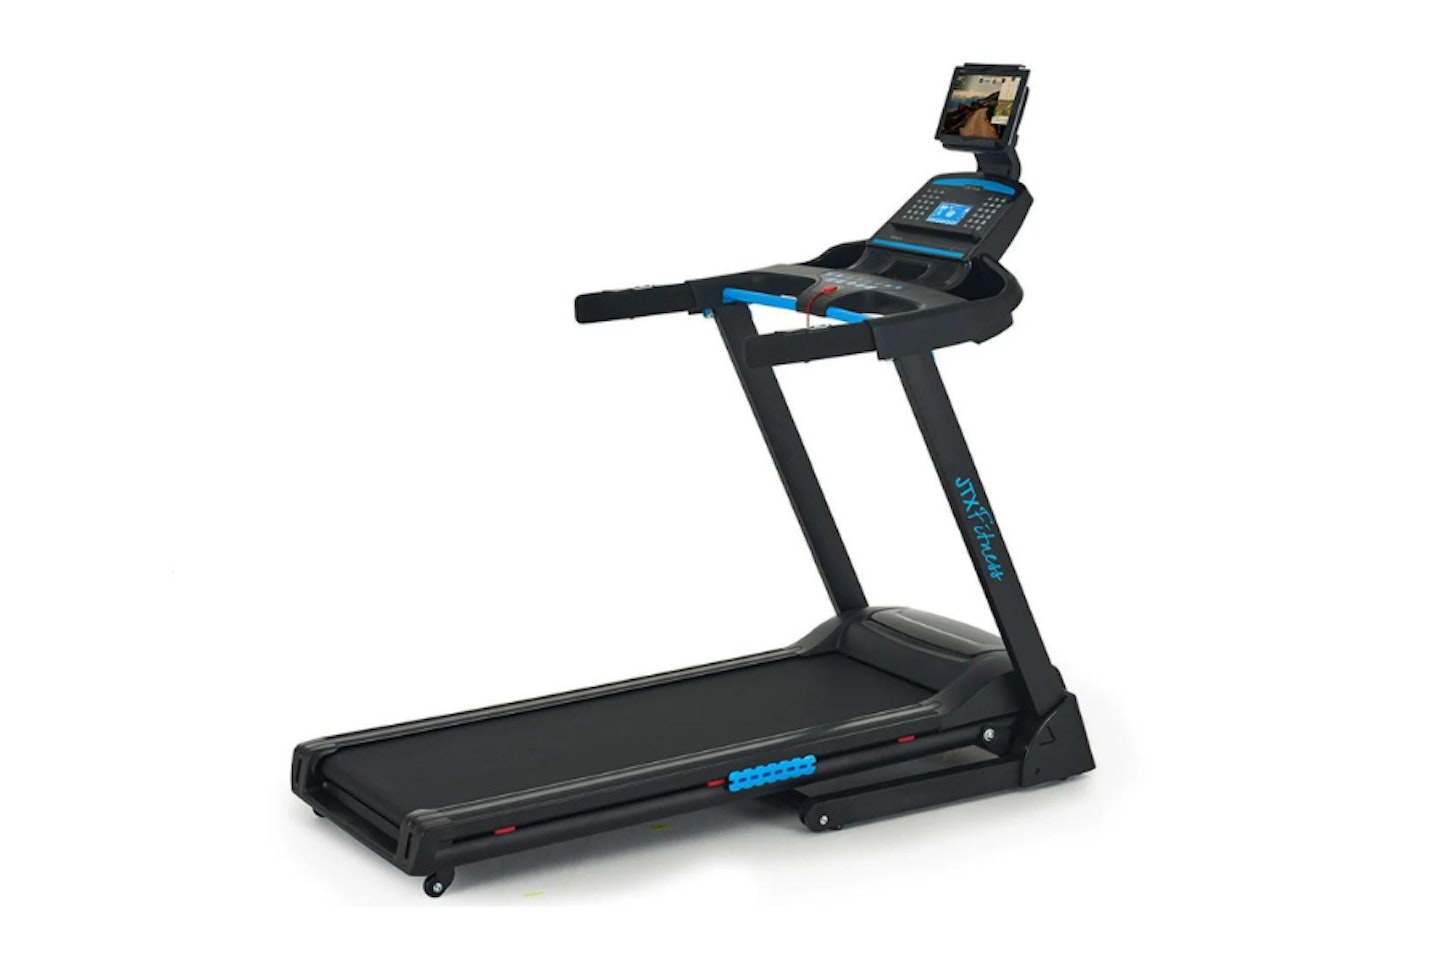 
JTX Sprint-3: Home Treadmill